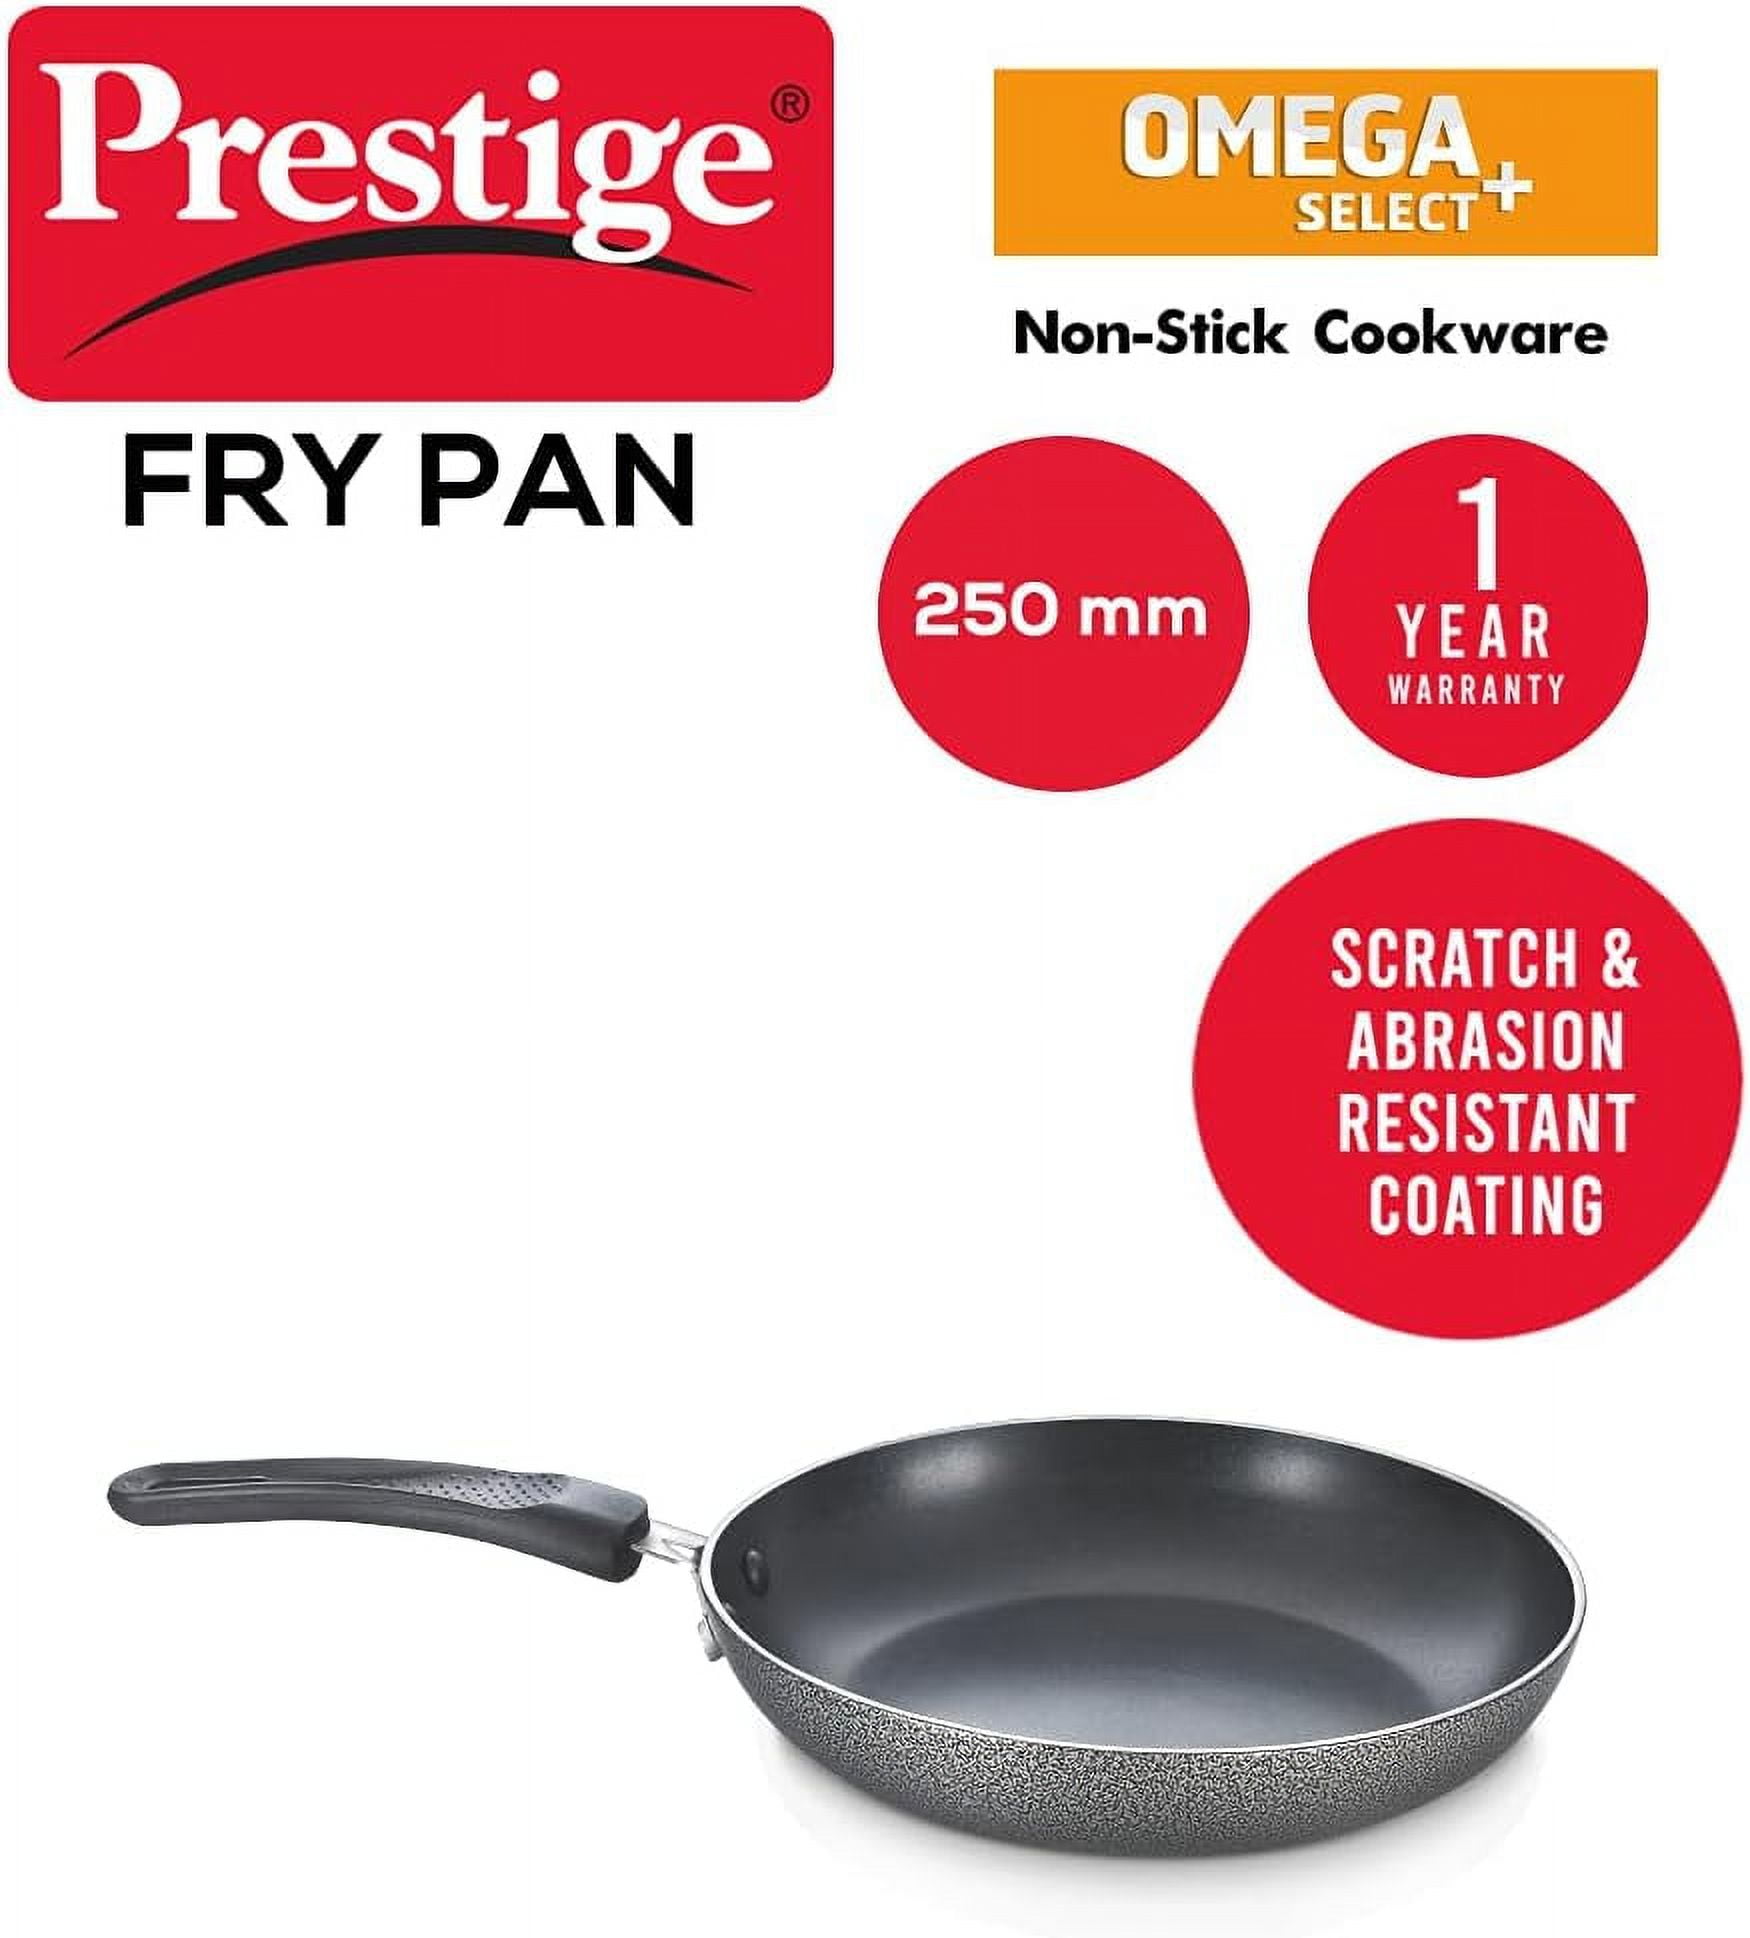 Non-stick Large Fry Pan ACNCSSX45LFP9 – Pyle USA